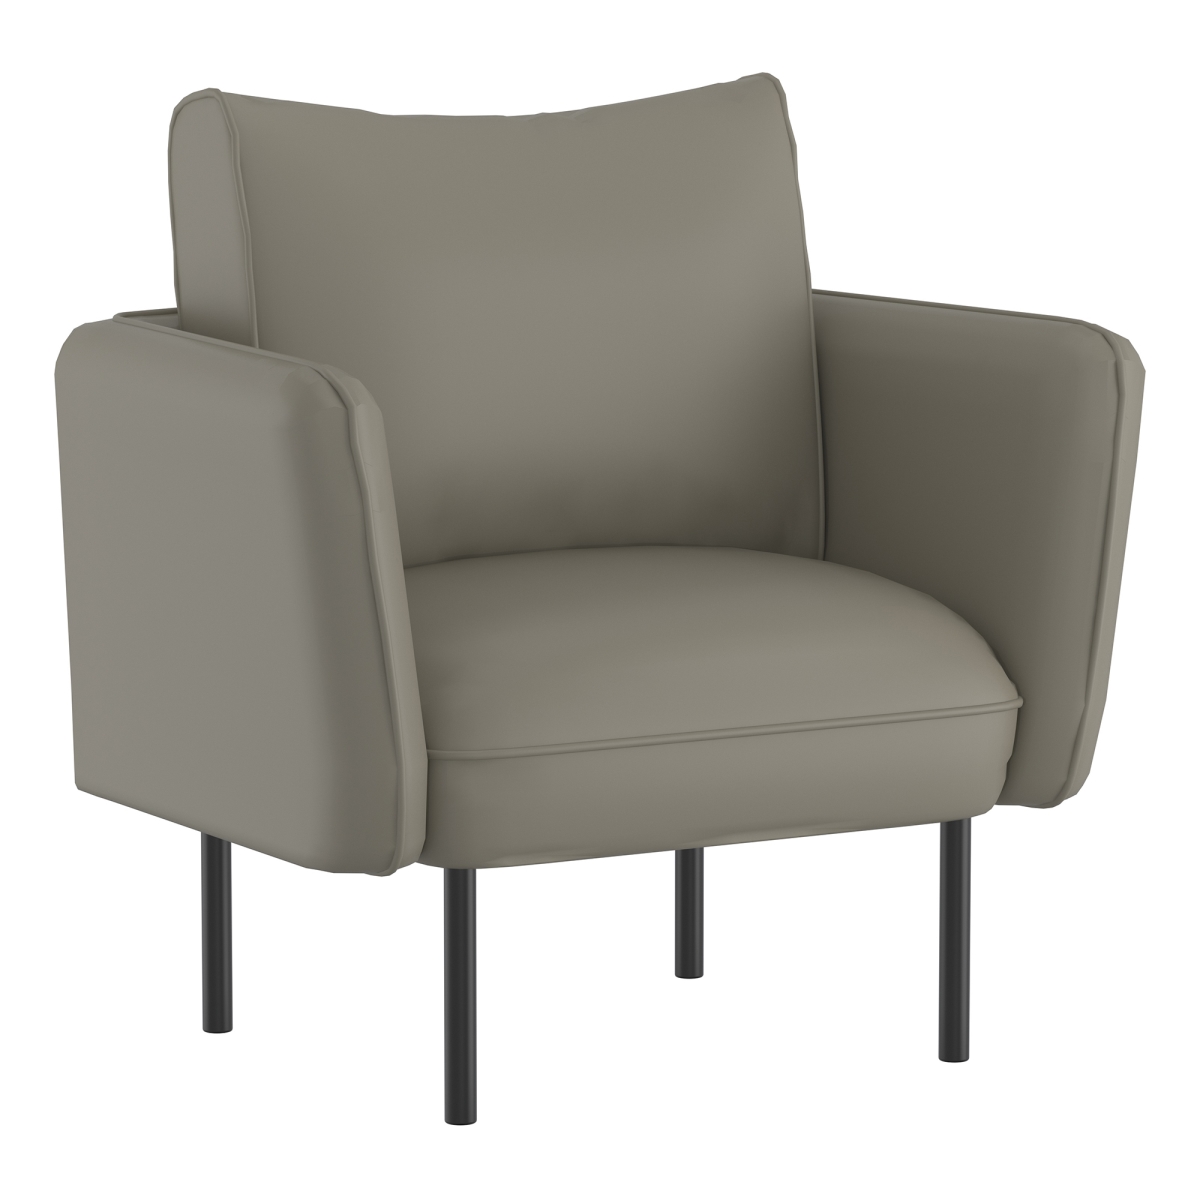 nspire 403-590GB 28.25 x 29.50 x 31.50 in. Ryker Accent Chair in Grey-Beige & Black